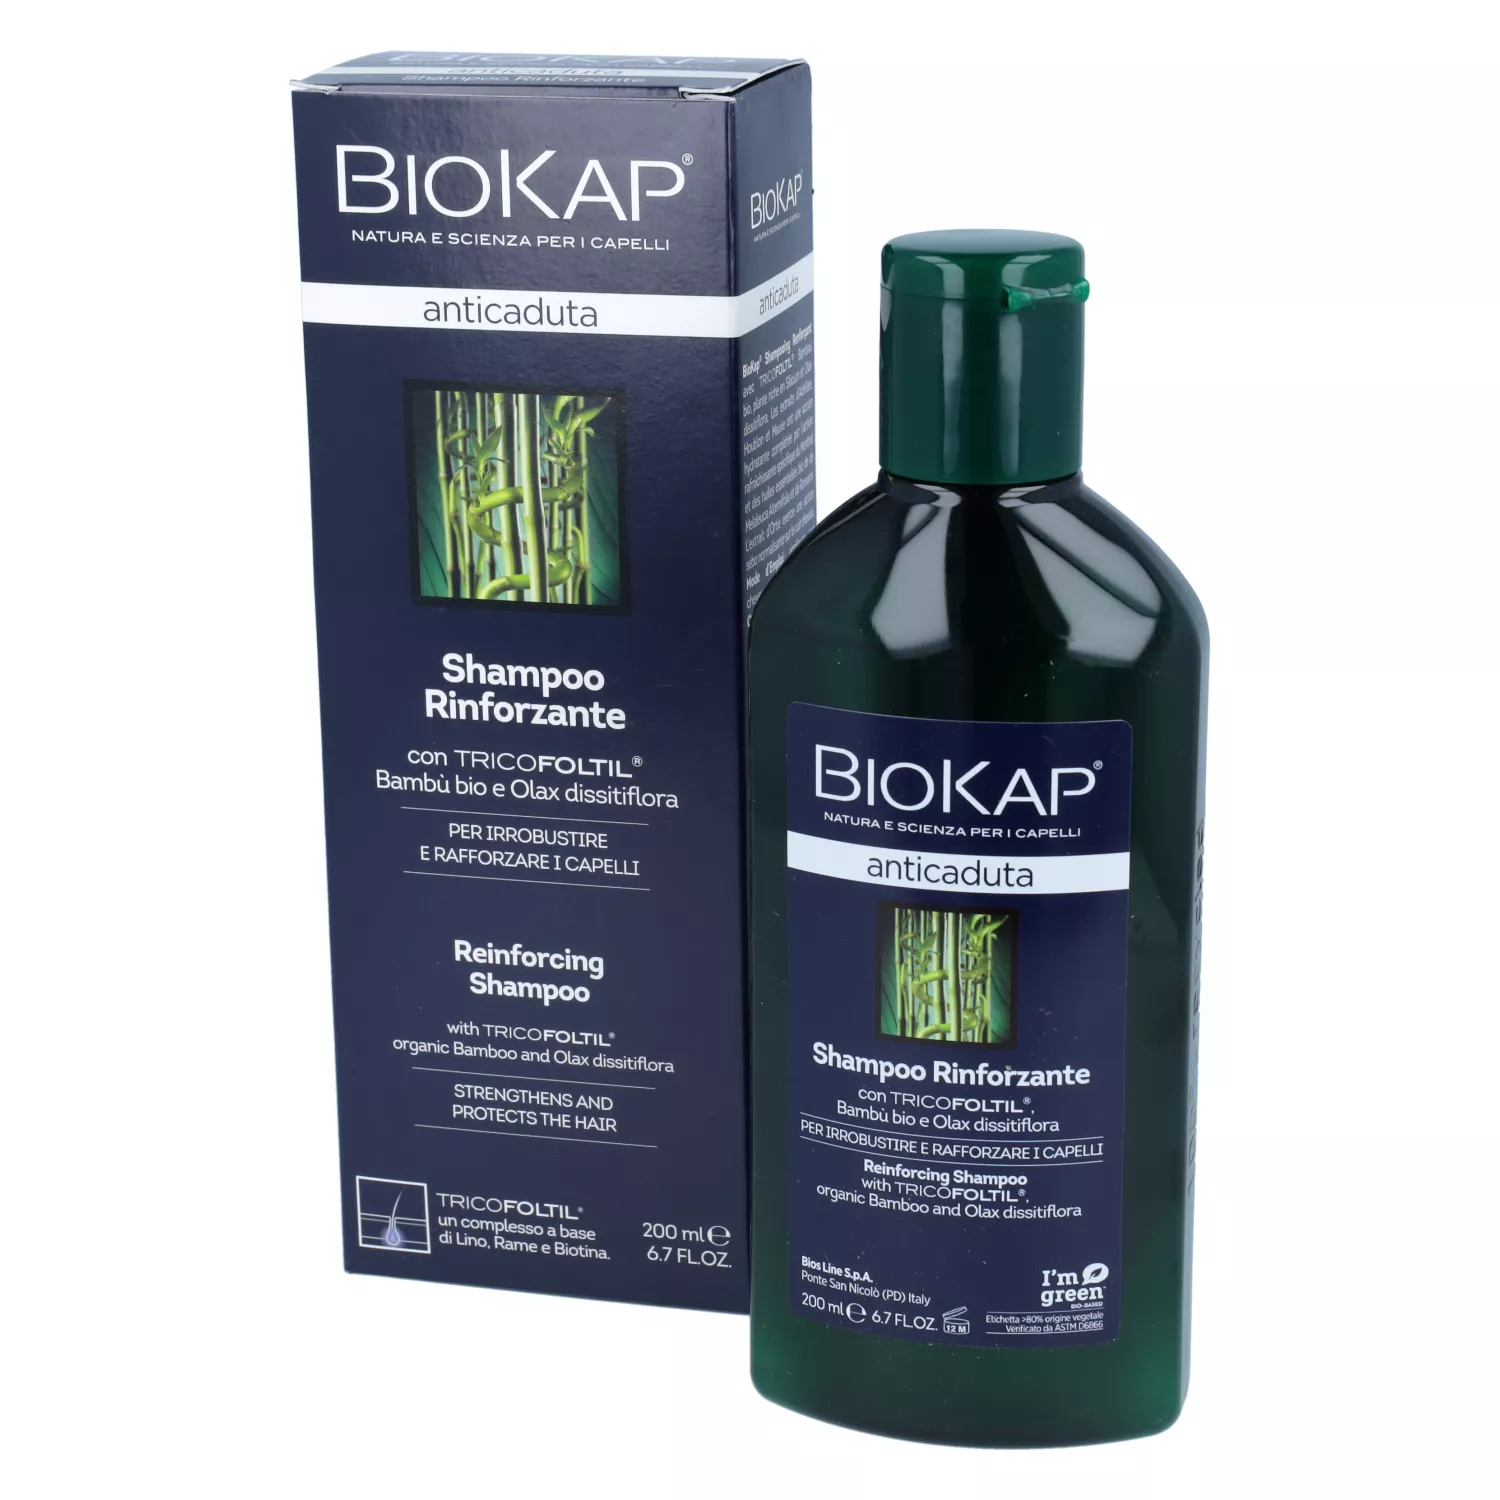 biokap bellezza szampon opinie